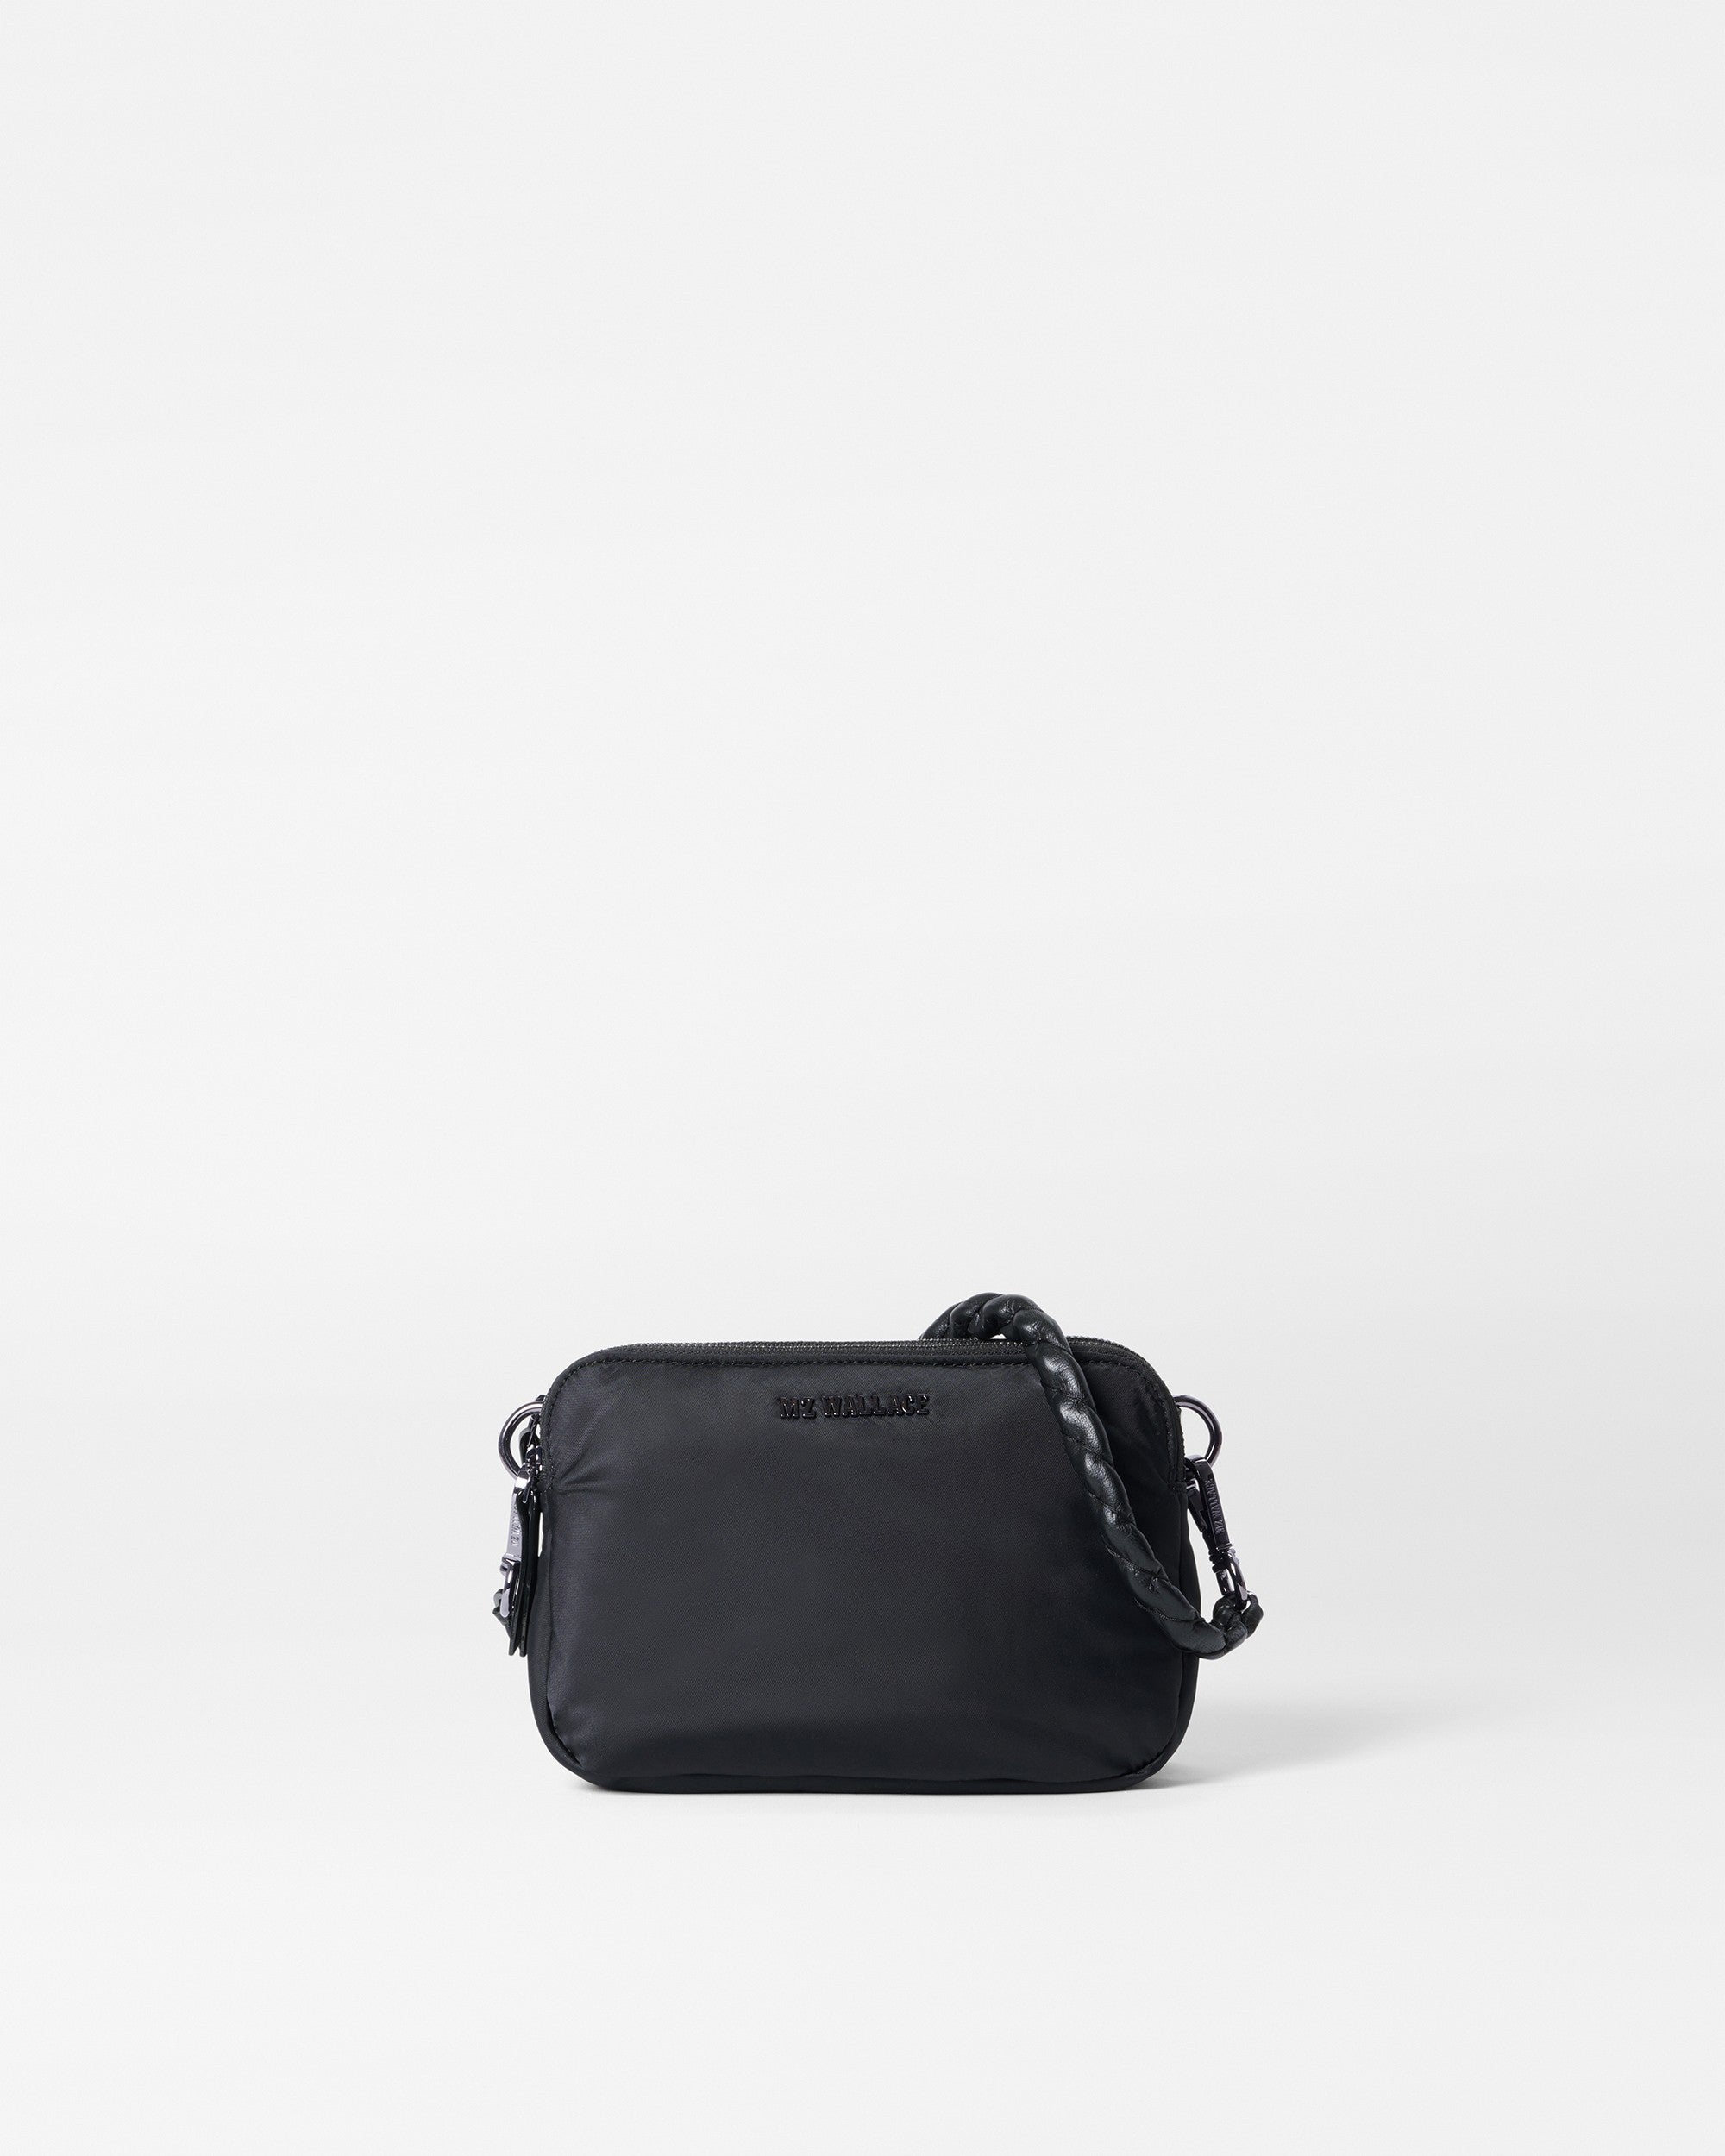 S black nylon crossbody bag